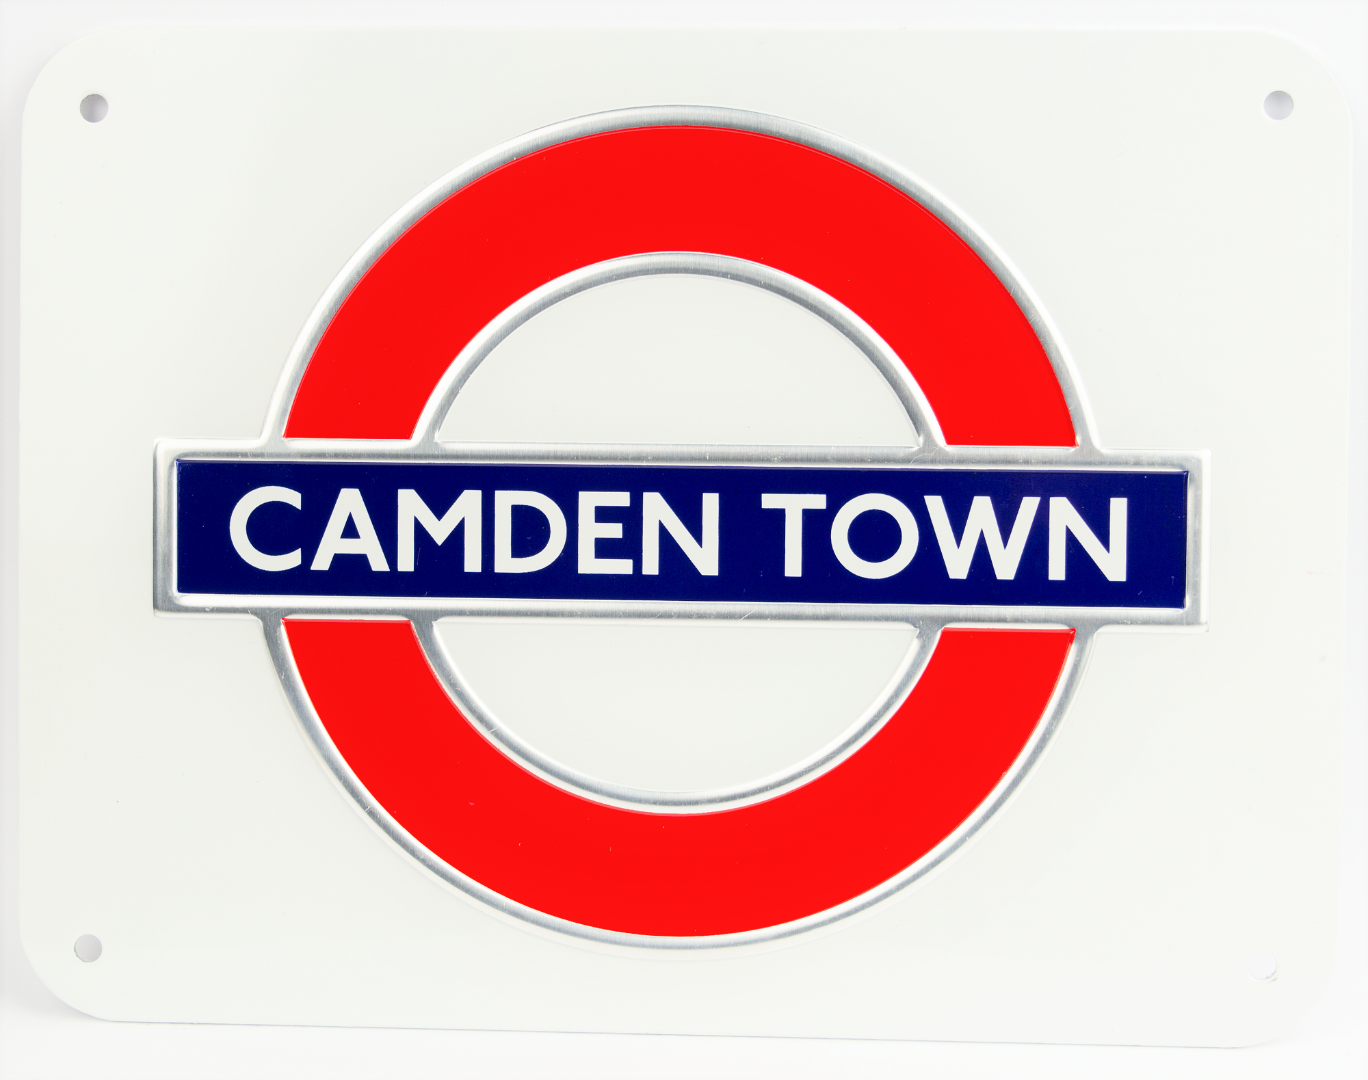 TFL3109 Licensed Camden Town Underground Metal Sign Large - British Heritage Brands